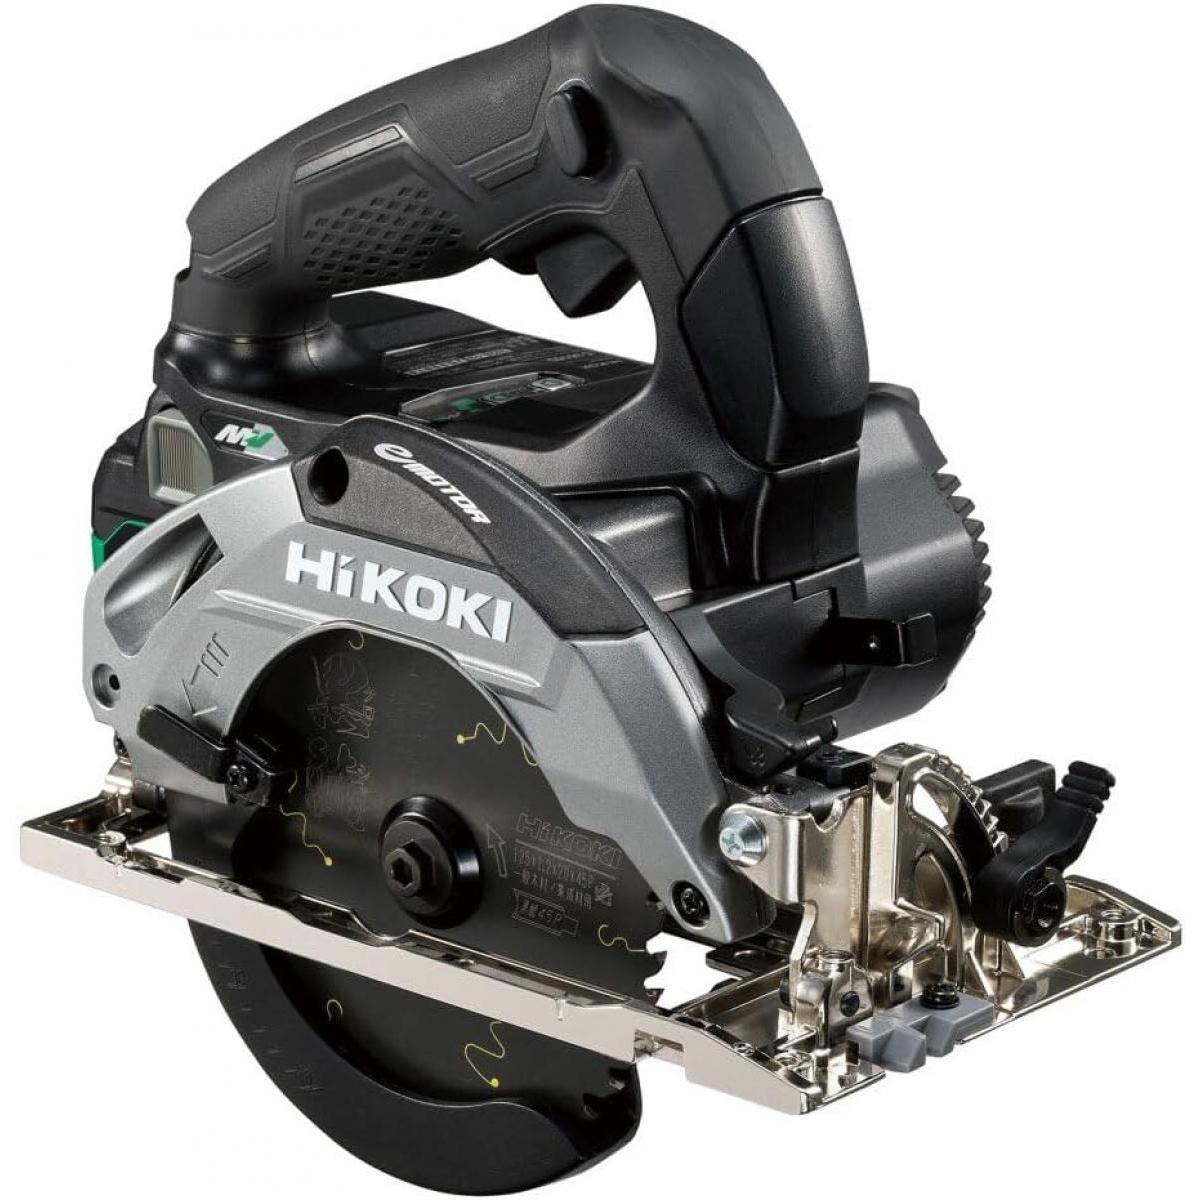 HiKOKI(ハイコーキ) 36V 充電式 丸のこ のこ刃125mm ストロングブラック 充電器・ケース・チップソー付 C3605DA(SK)(2XPBSZ)